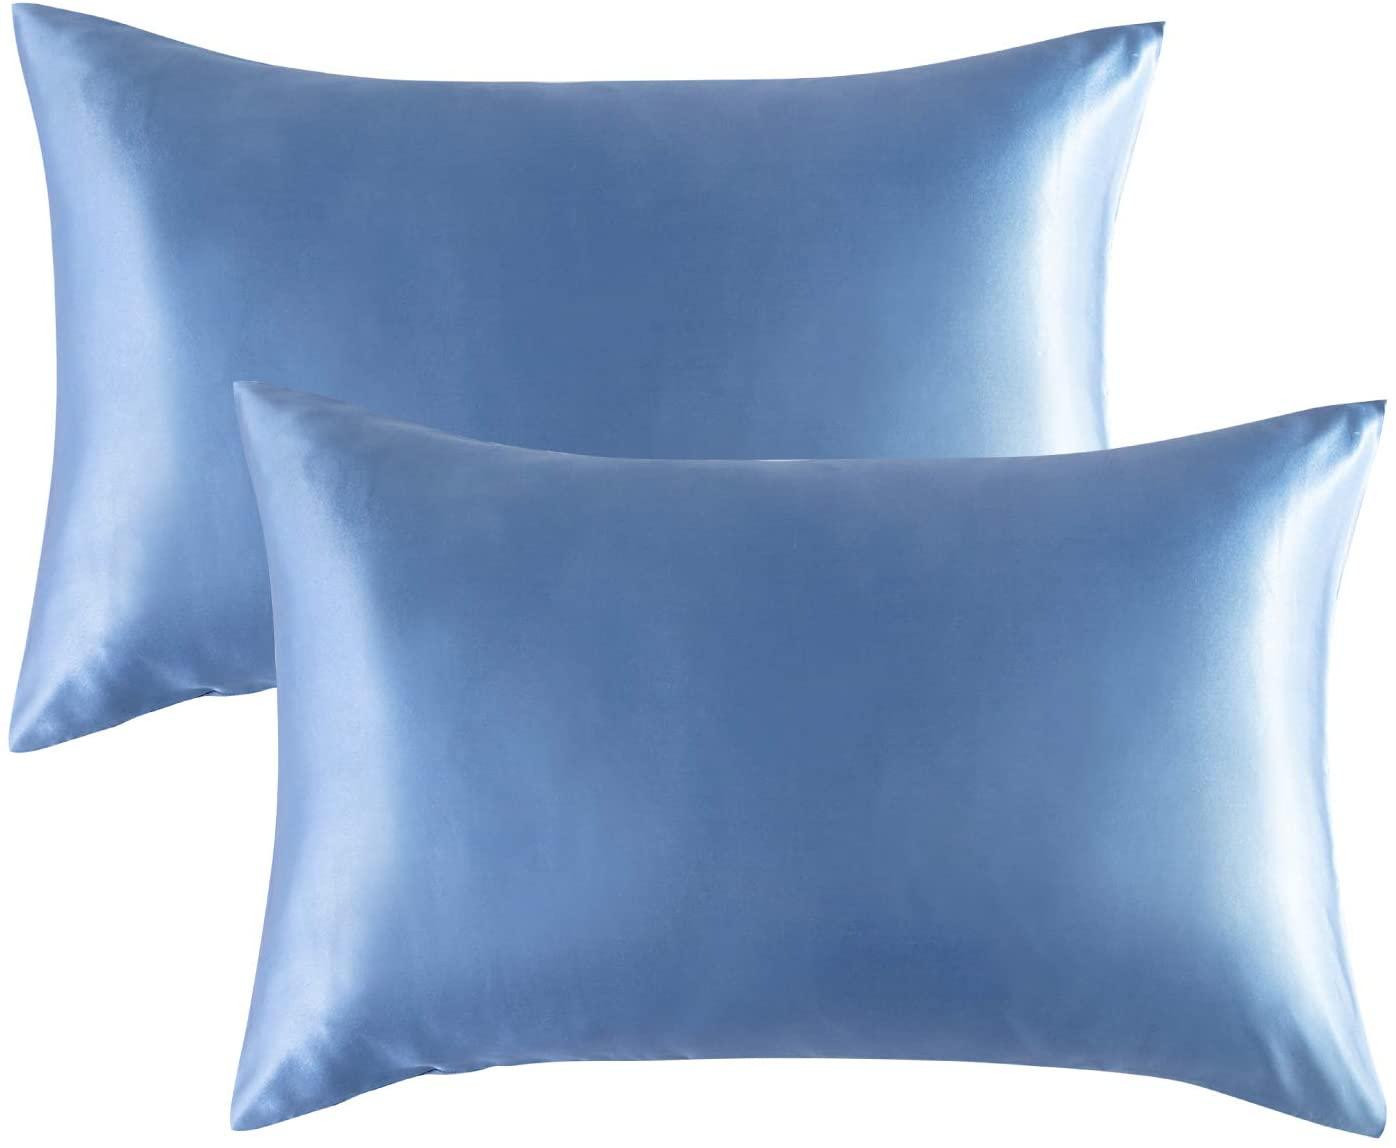 2 Bedsure Essentials Satin Pillow Cases for $5.29